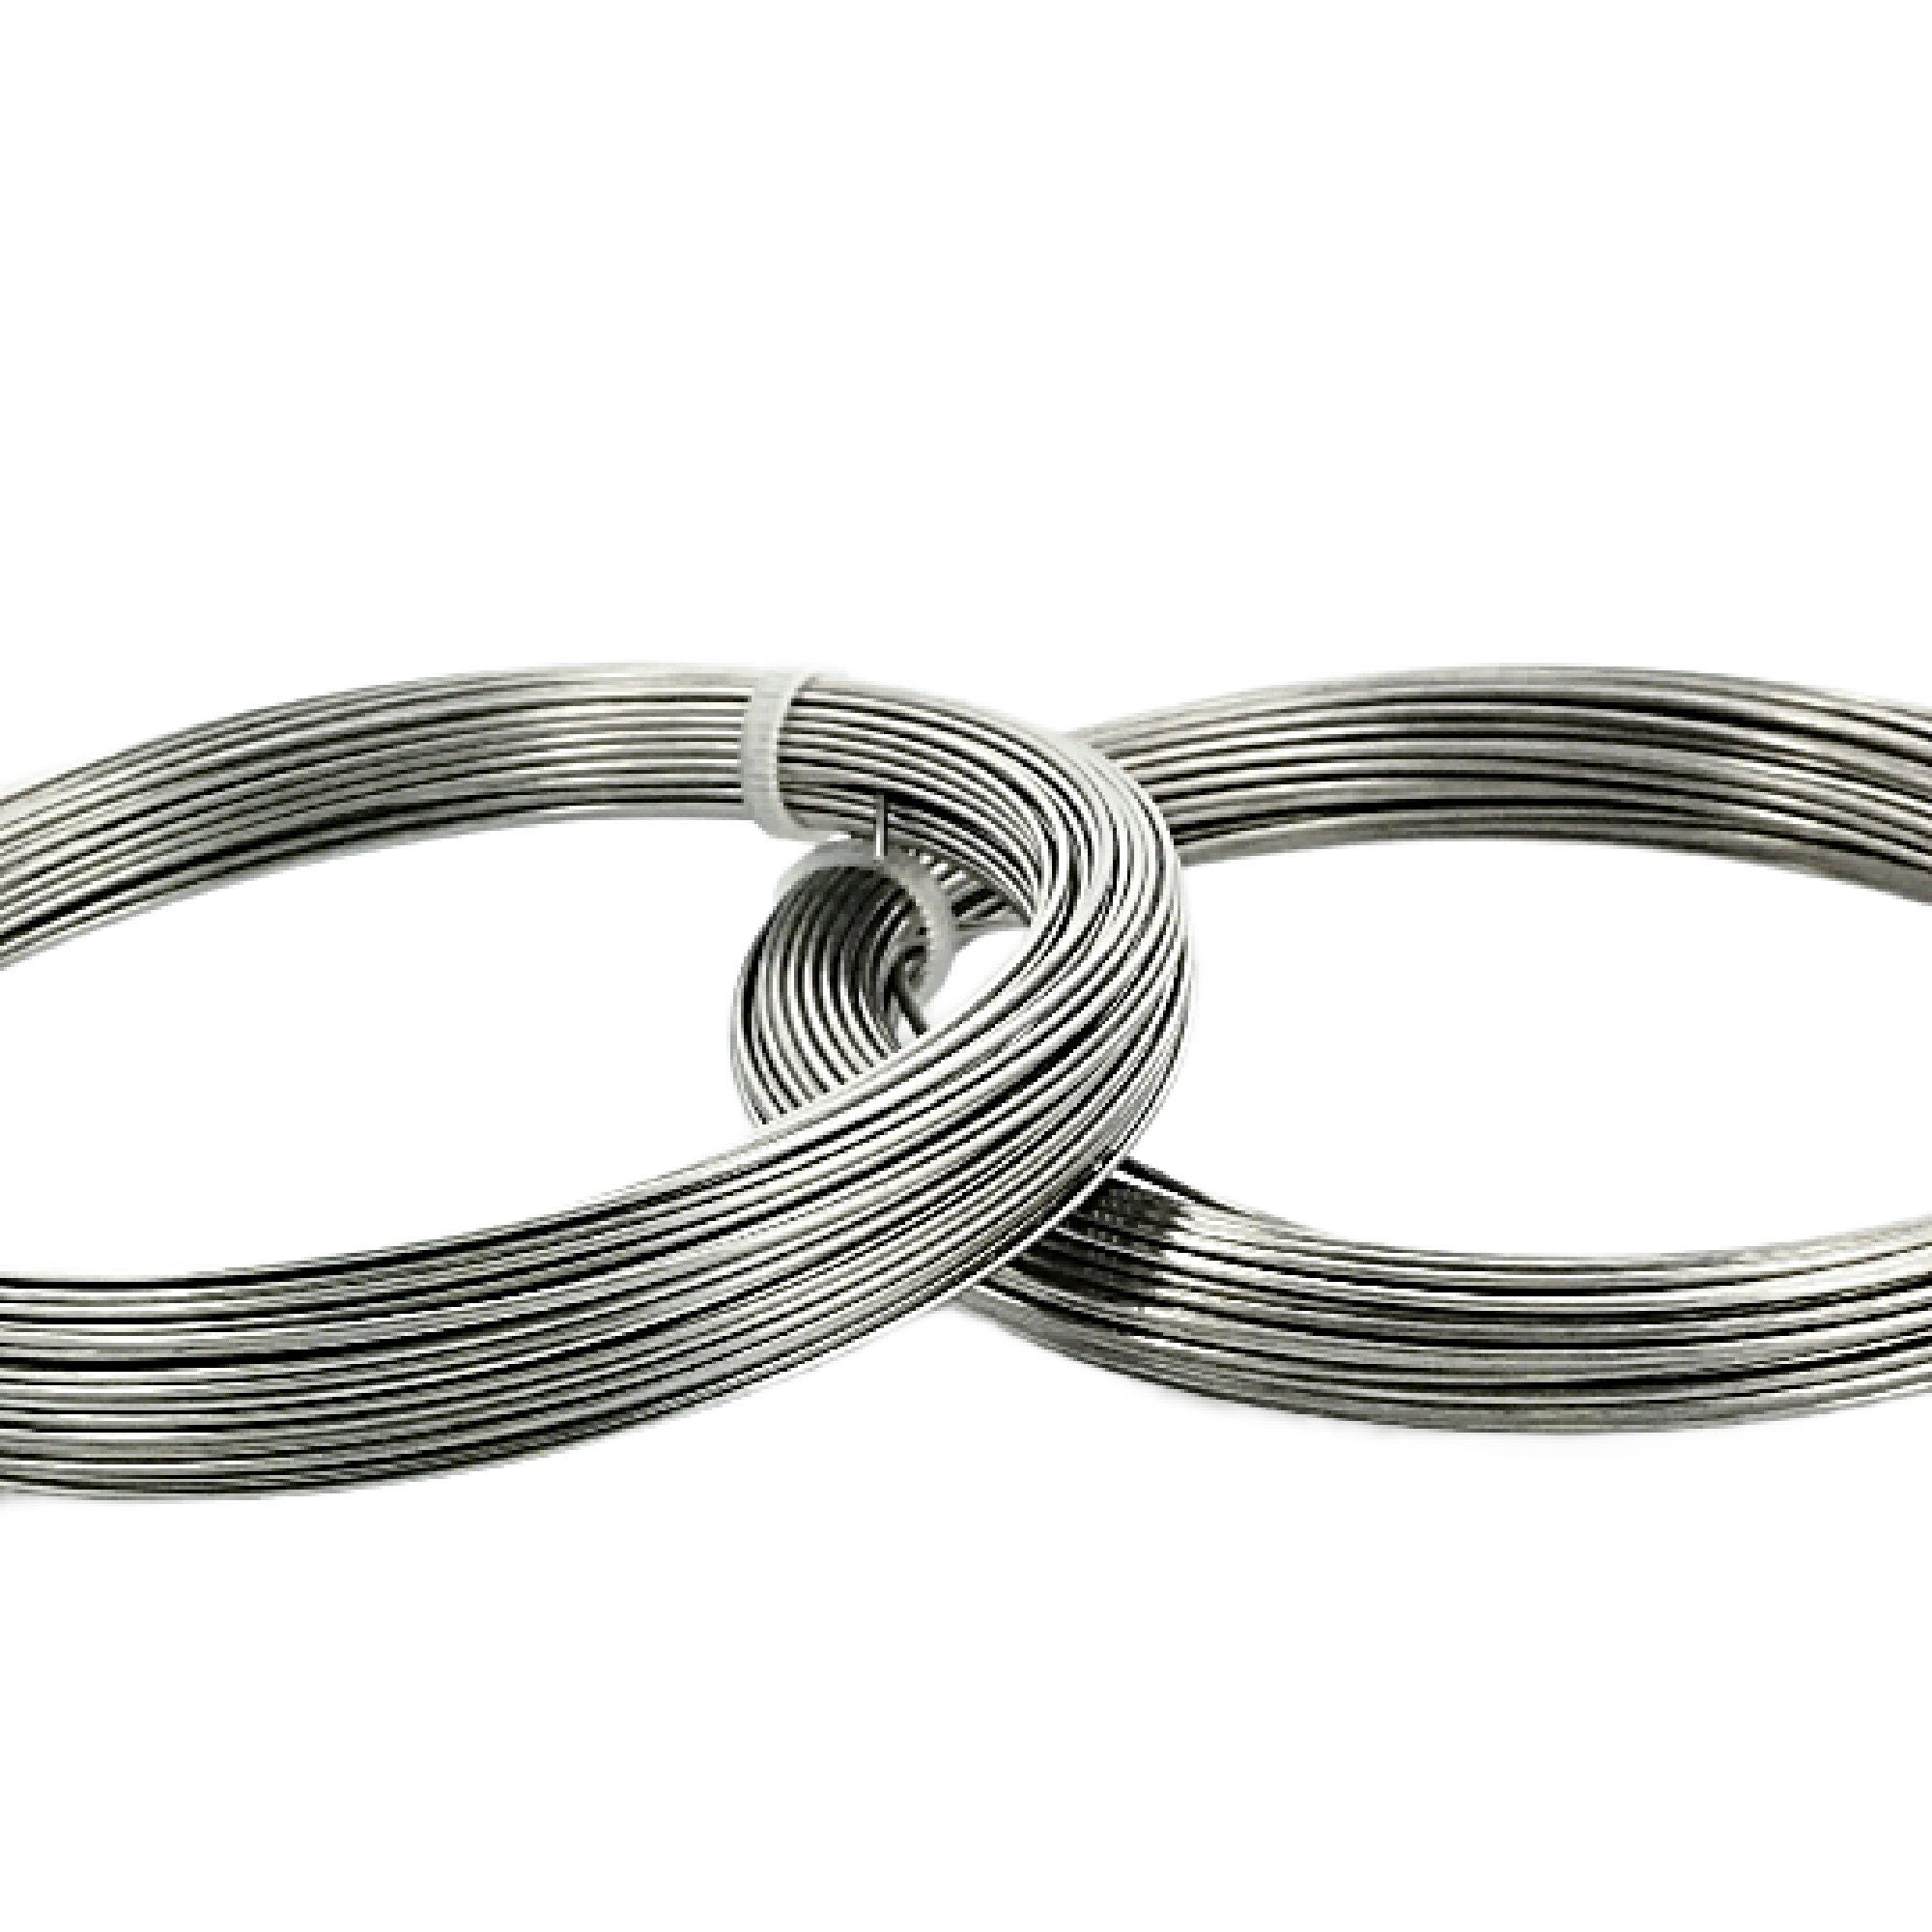 5pcs Durable 2.5#-10# Stainless Steel Eye Ceramic Ring Single Leg